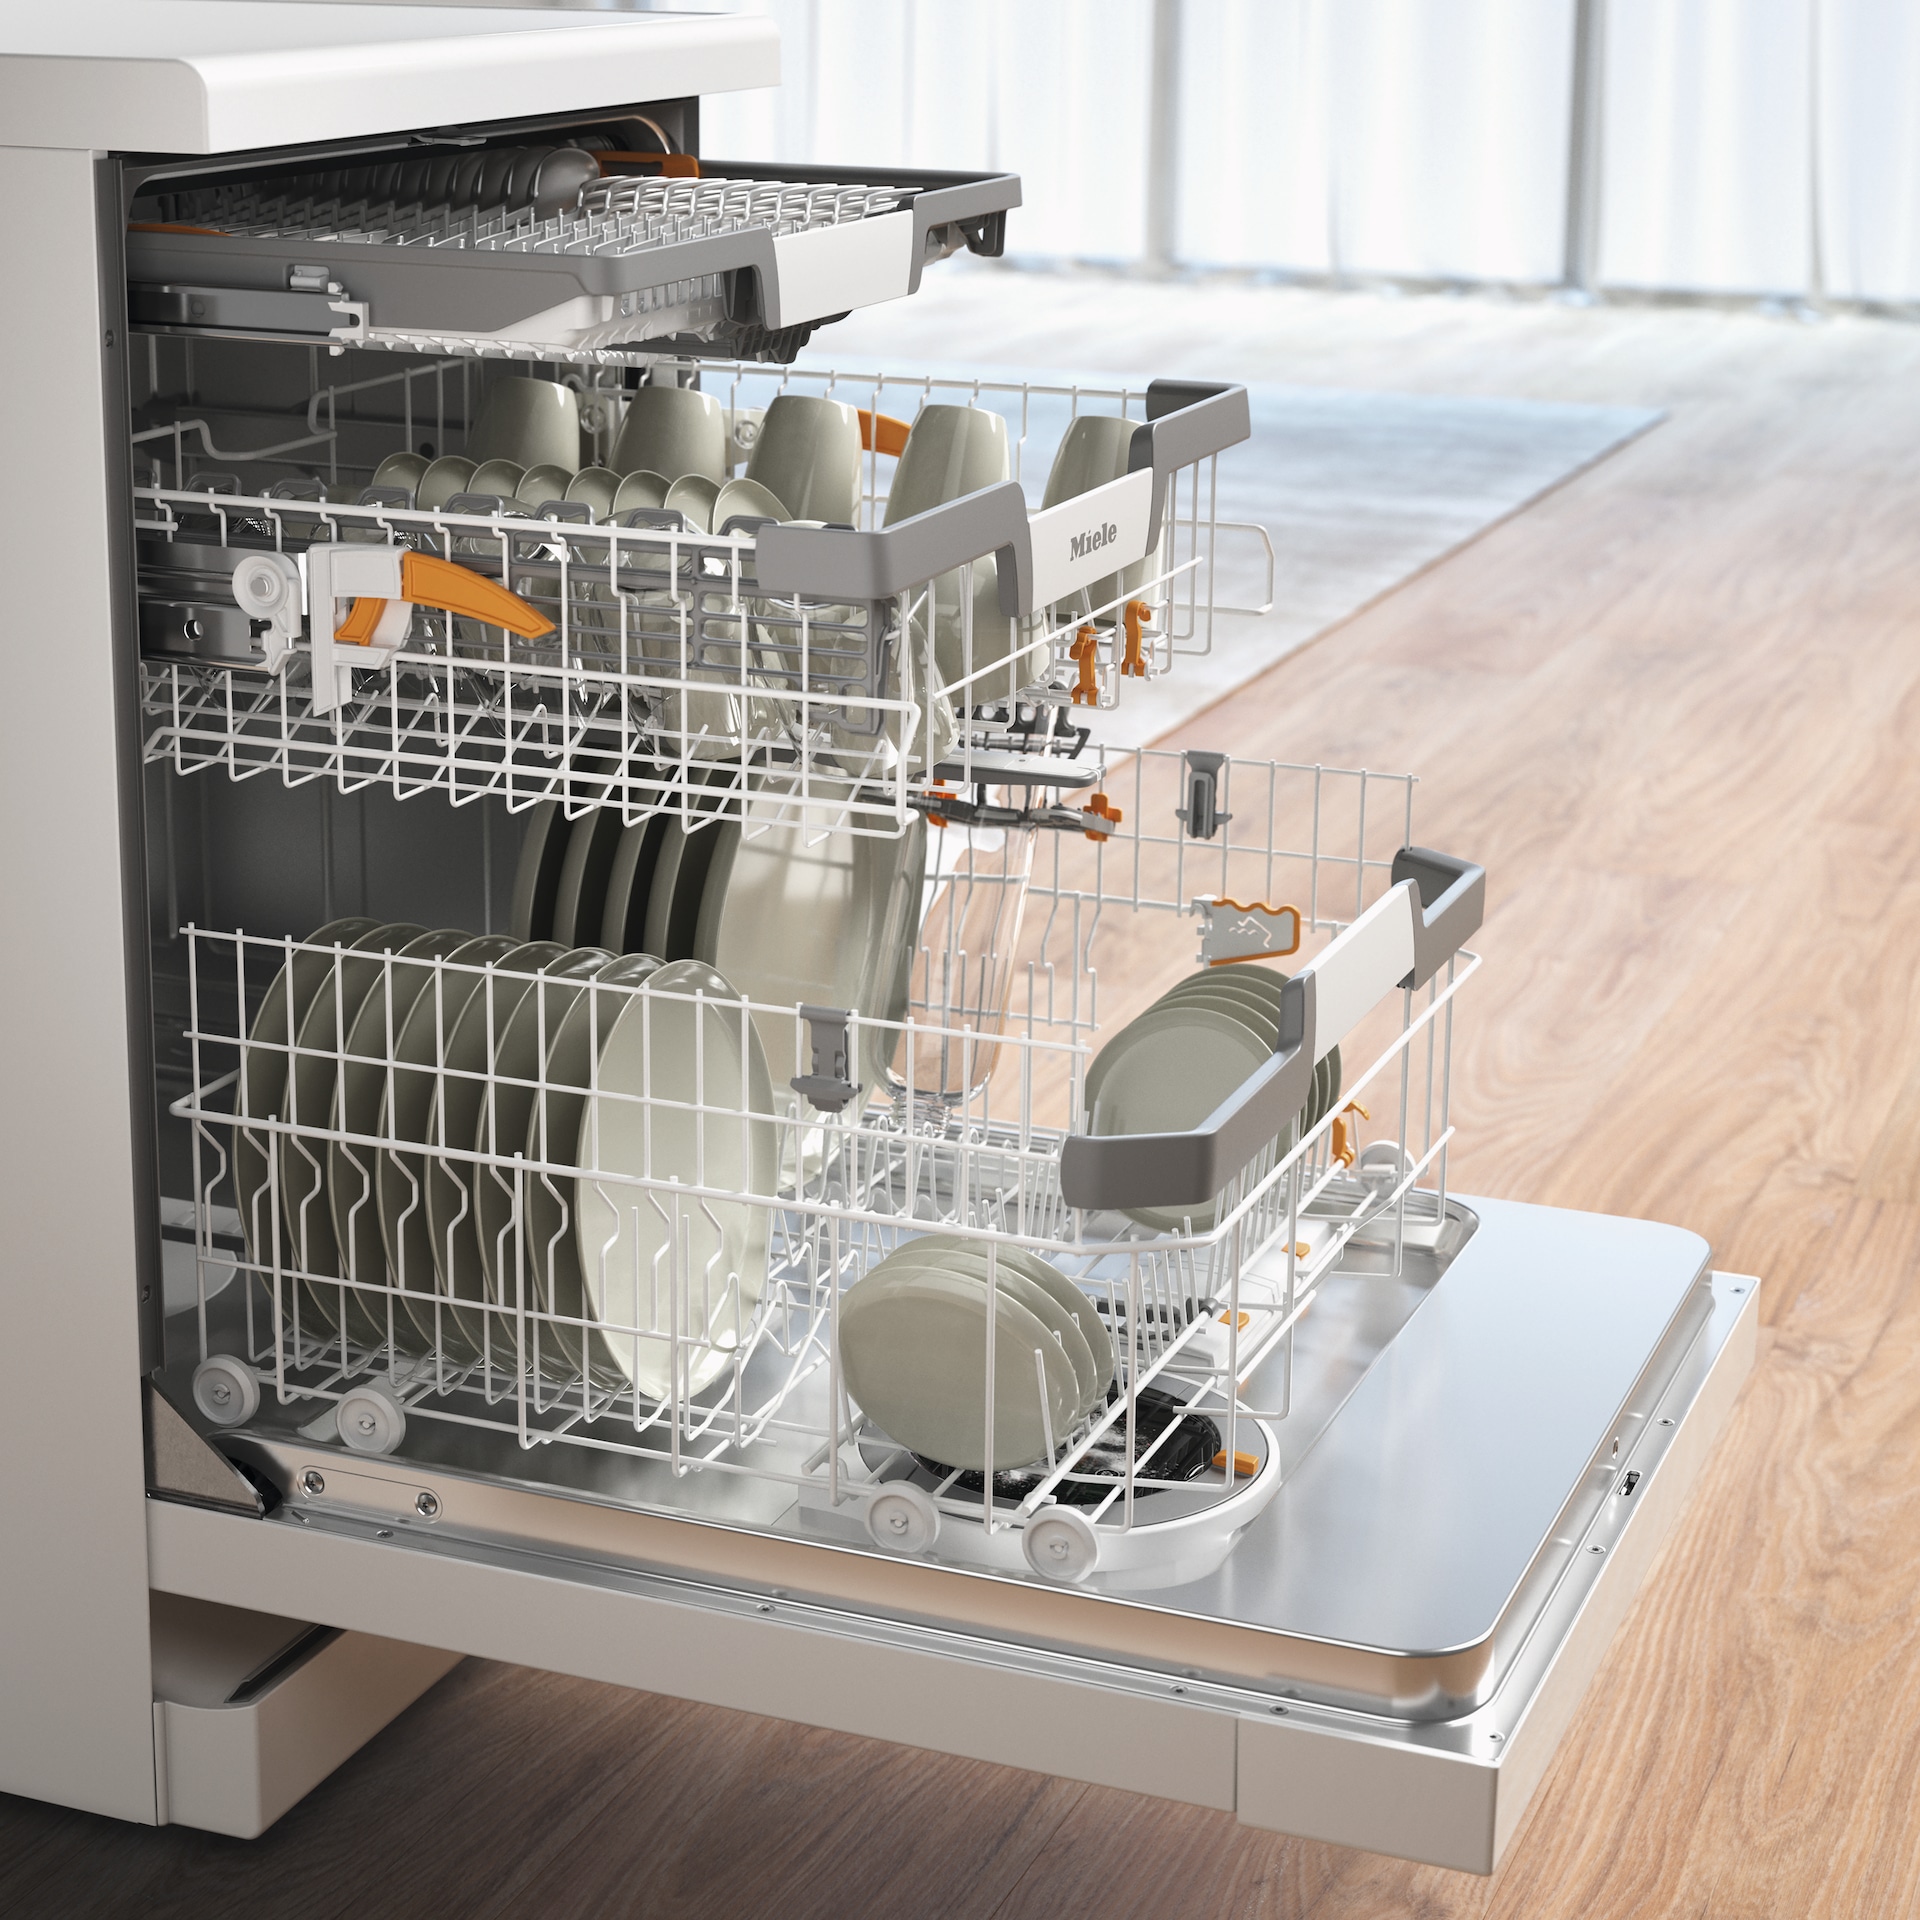 Dishwashers - G 7600 SC AutoDos - 4